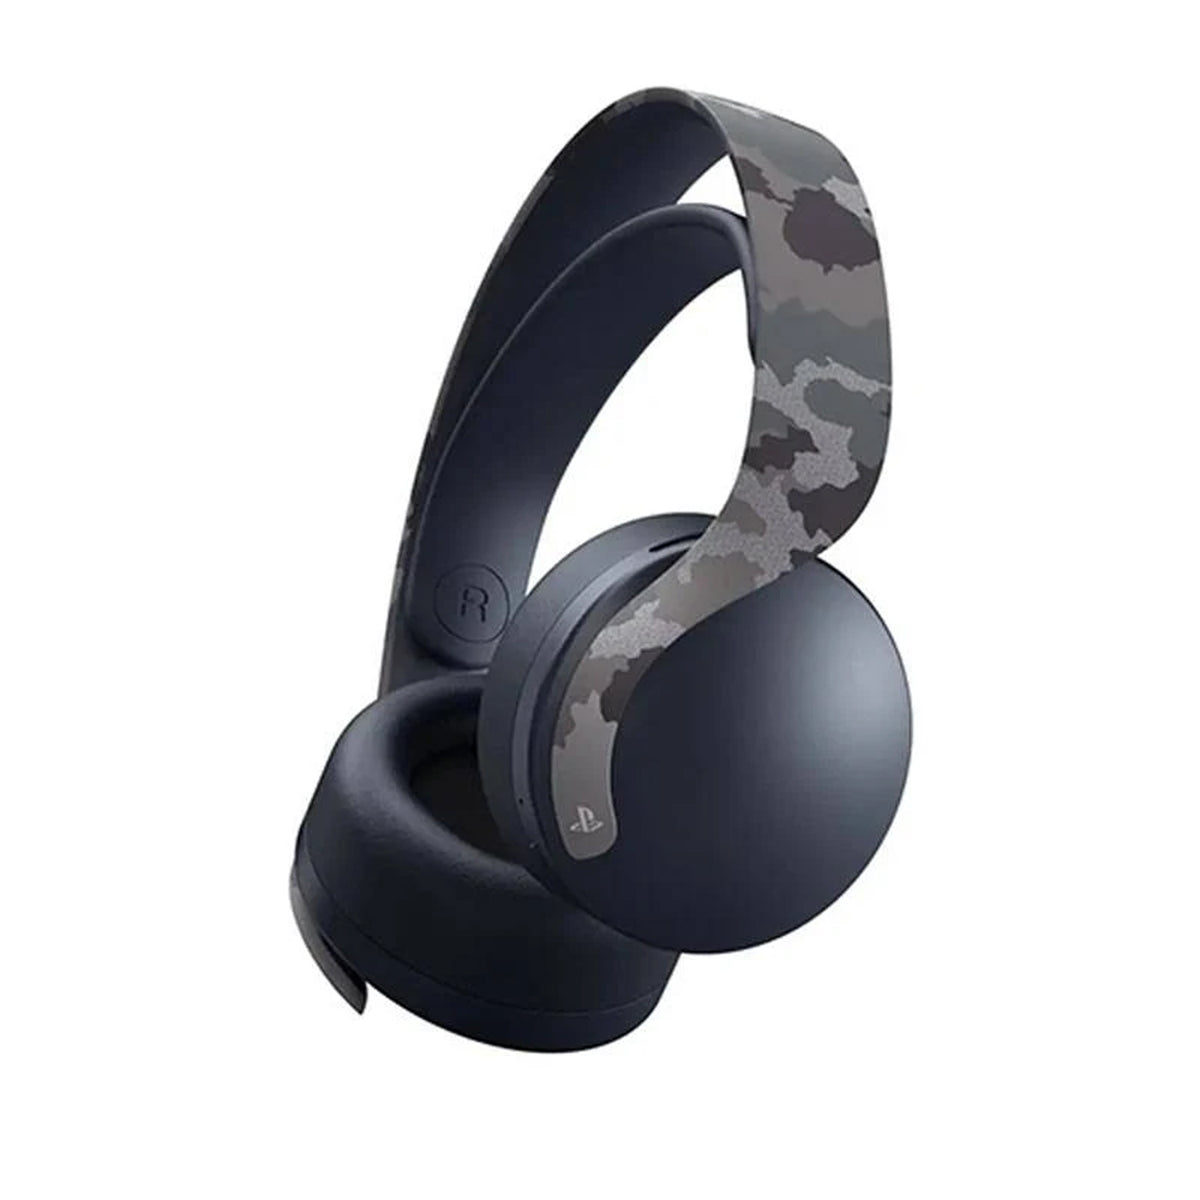 Sony PlayStation 5 (PS5) PULSE 3D Wireless Headset